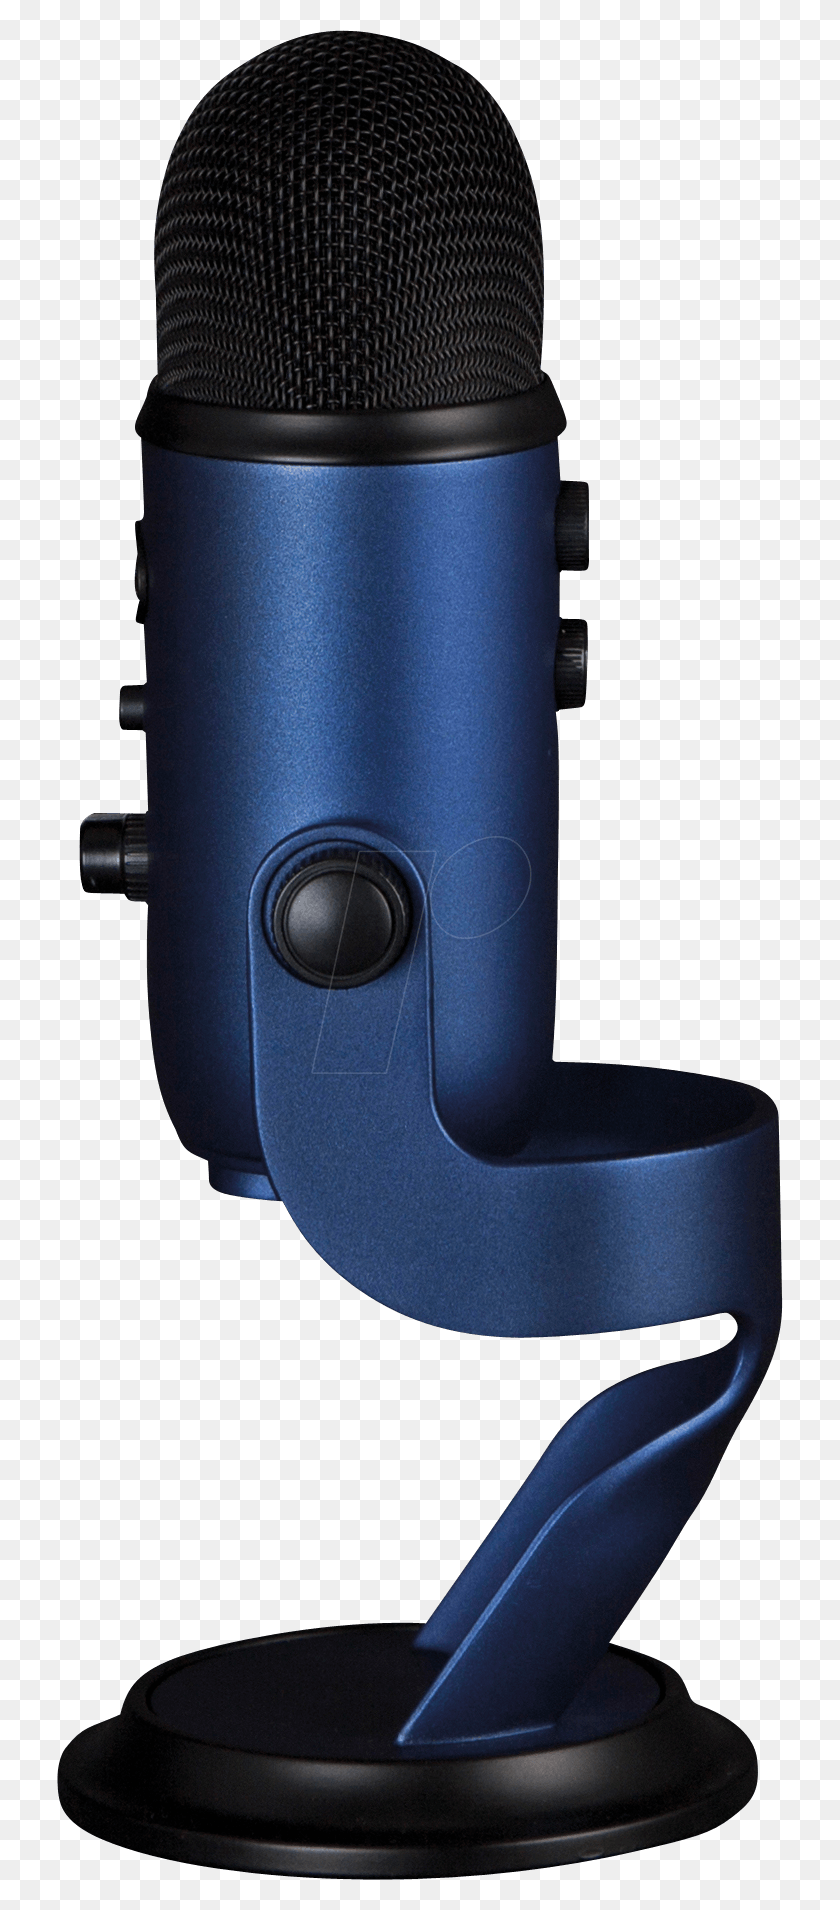 726x1850 Descargar Png Micrófono Usb Yeti Azul De Medianoche Micrófonos Azules Yeti Azul Midnight Blue, Cámara, Electrónica, Cilindro Hd Png